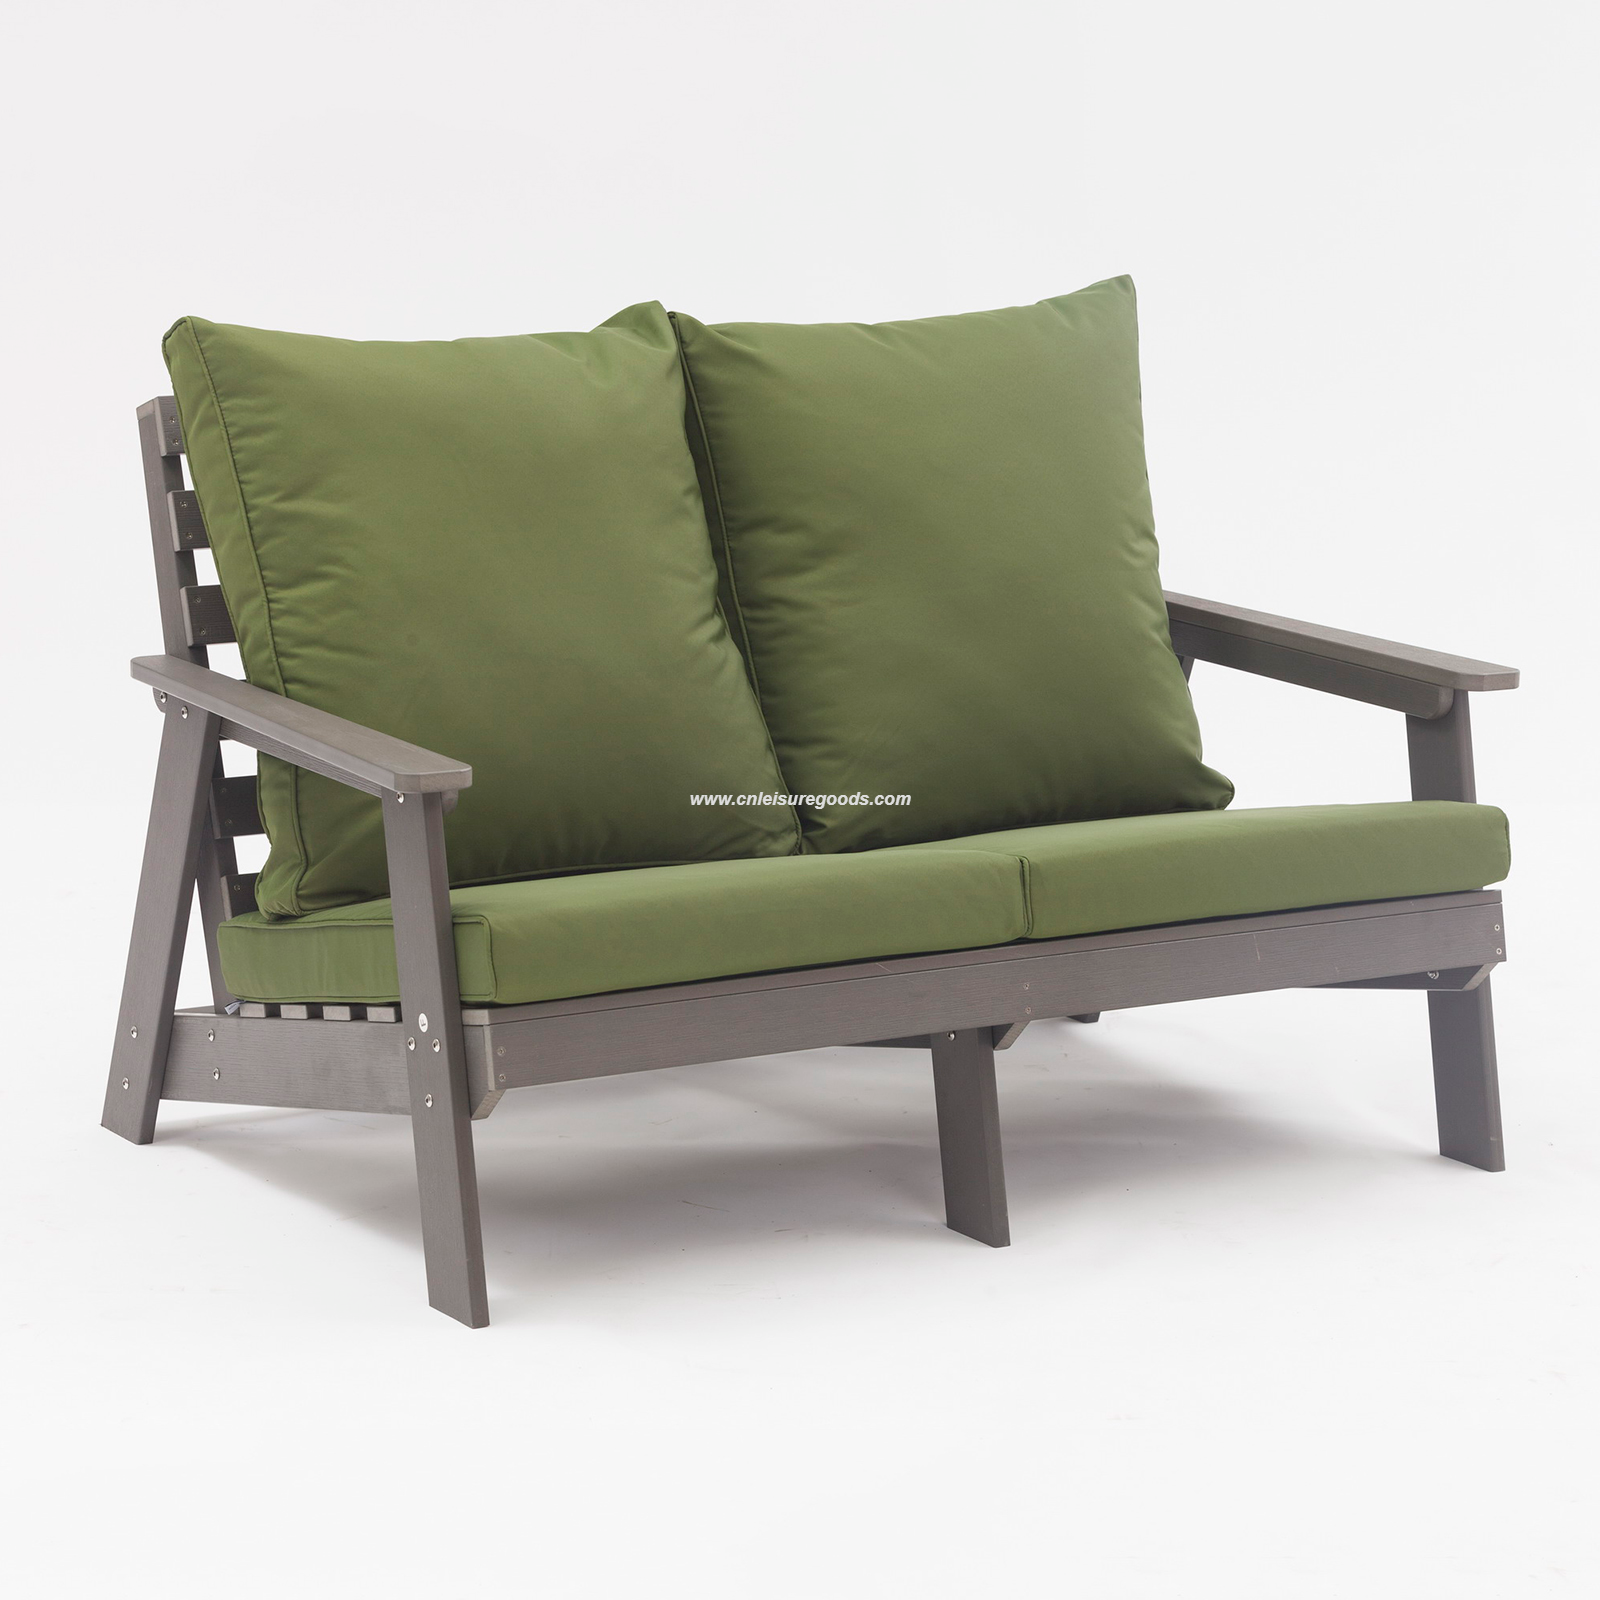 Uplion Outdoor Furniture Plastic Wood 2-seat Sofa Chair Leisure Plastic Wood Chair